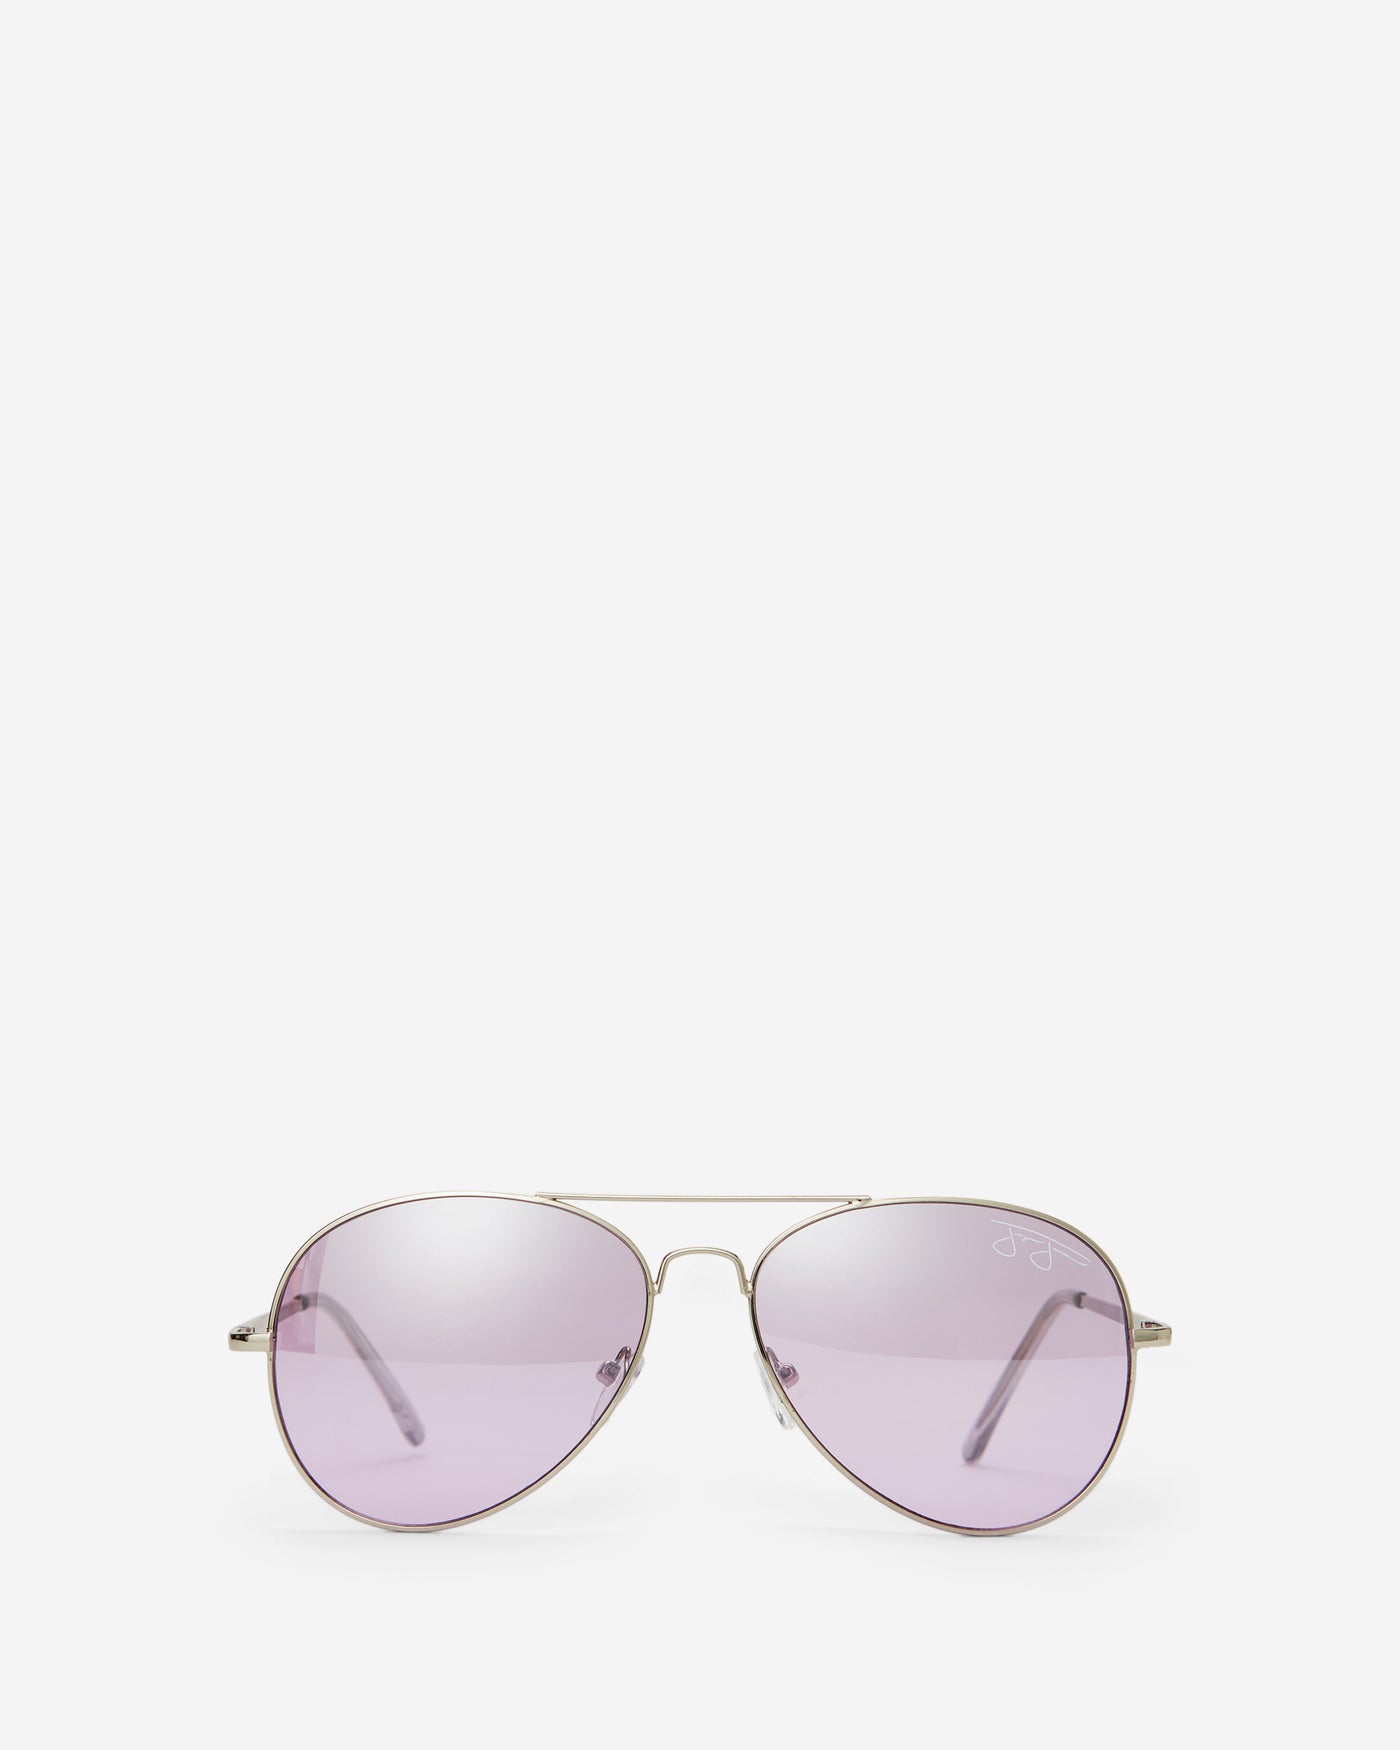 Classic Aviator Sunglasses - Light Gold Metal Frame with Purple Lens Sunglasses Joey James, The Label   